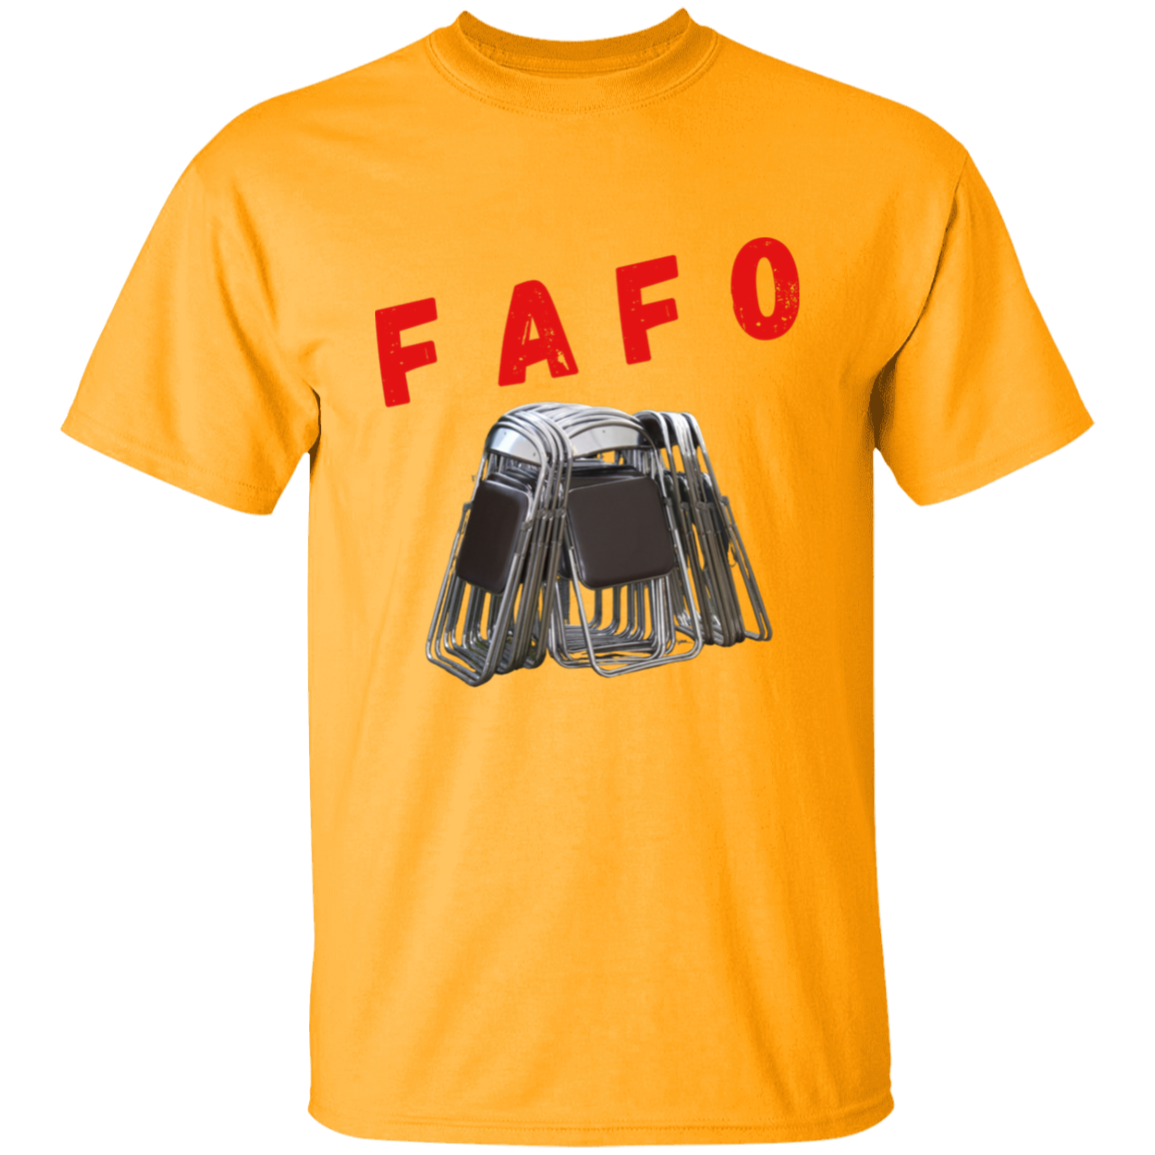 FAFO Short Sleeve Shirt